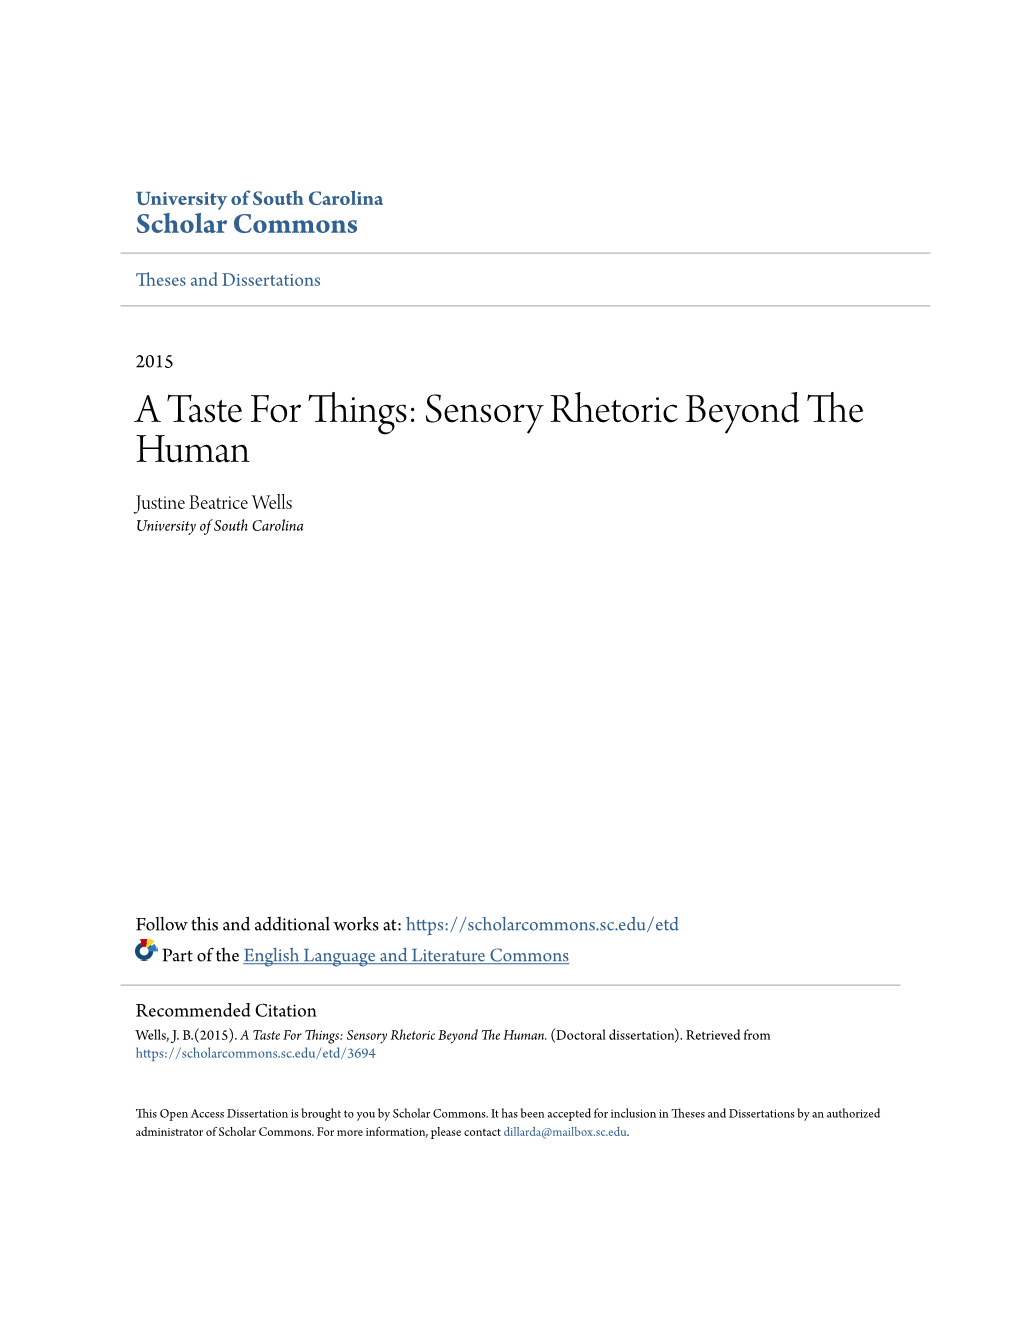 A Taste for Things: Sensory Rhetoric Beyond the Human Justine Beatrice Wells University of South Carolina